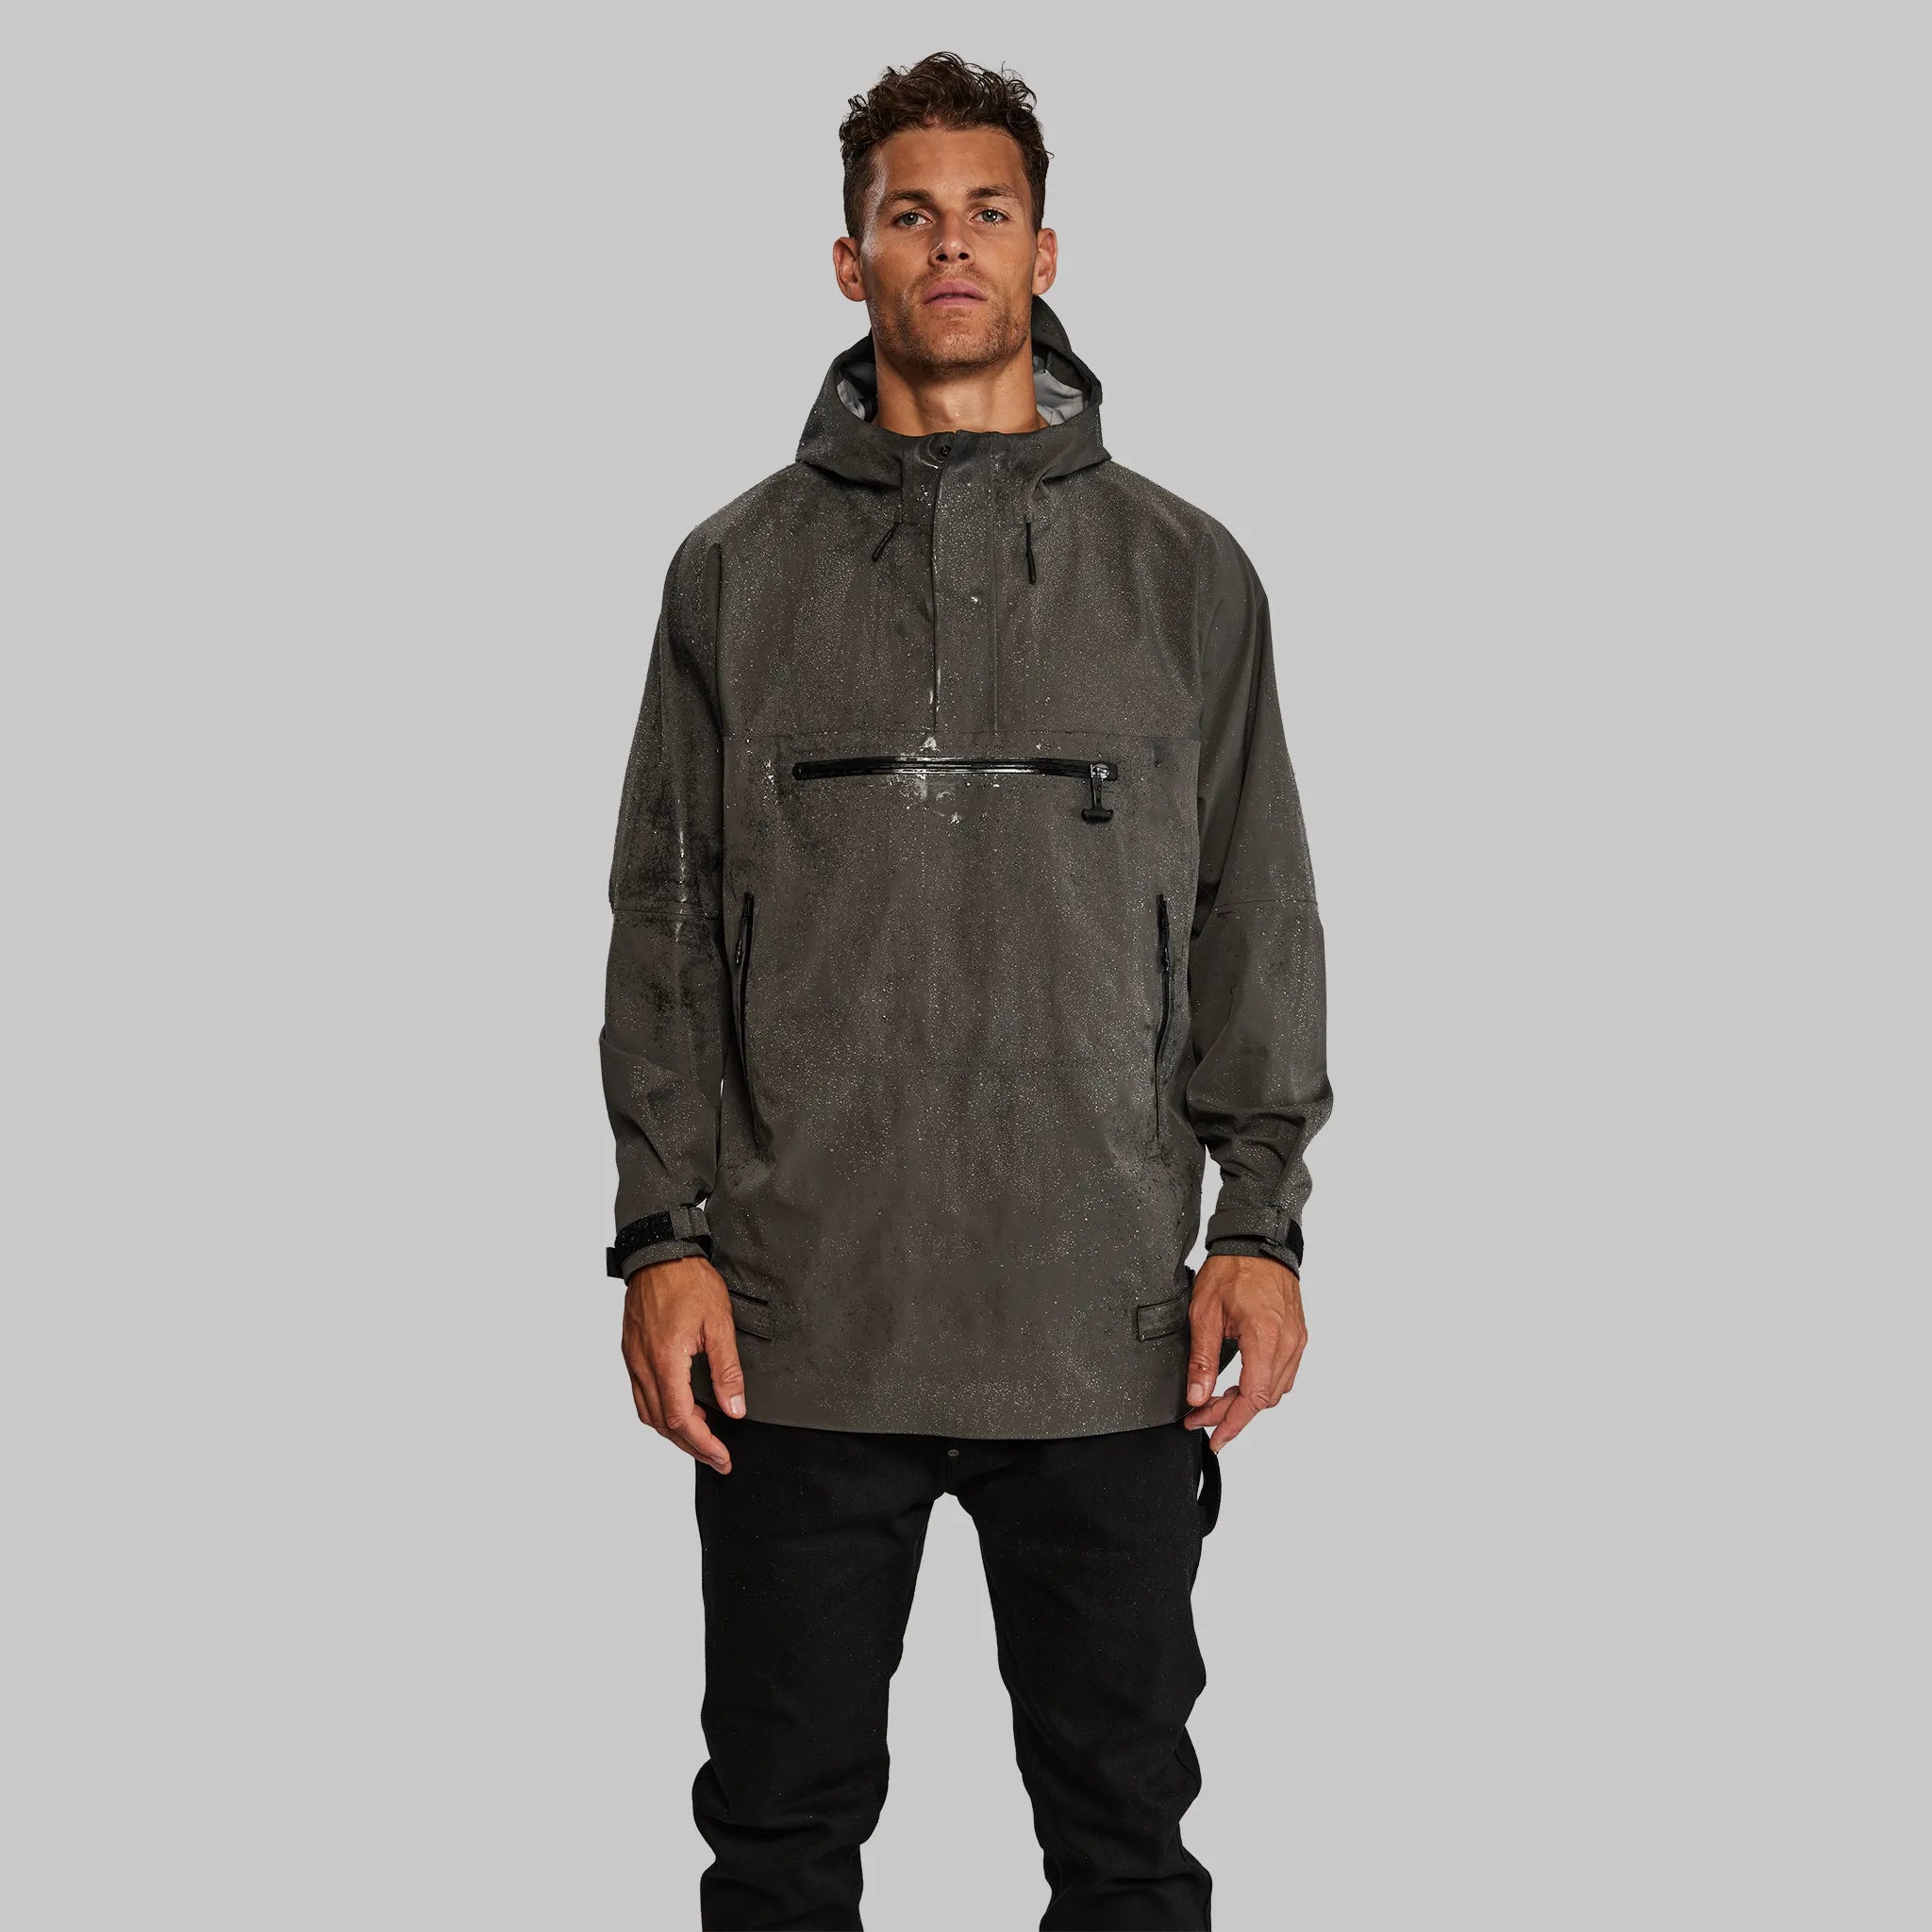 Waterfallproof Jacket. Half-zip edition